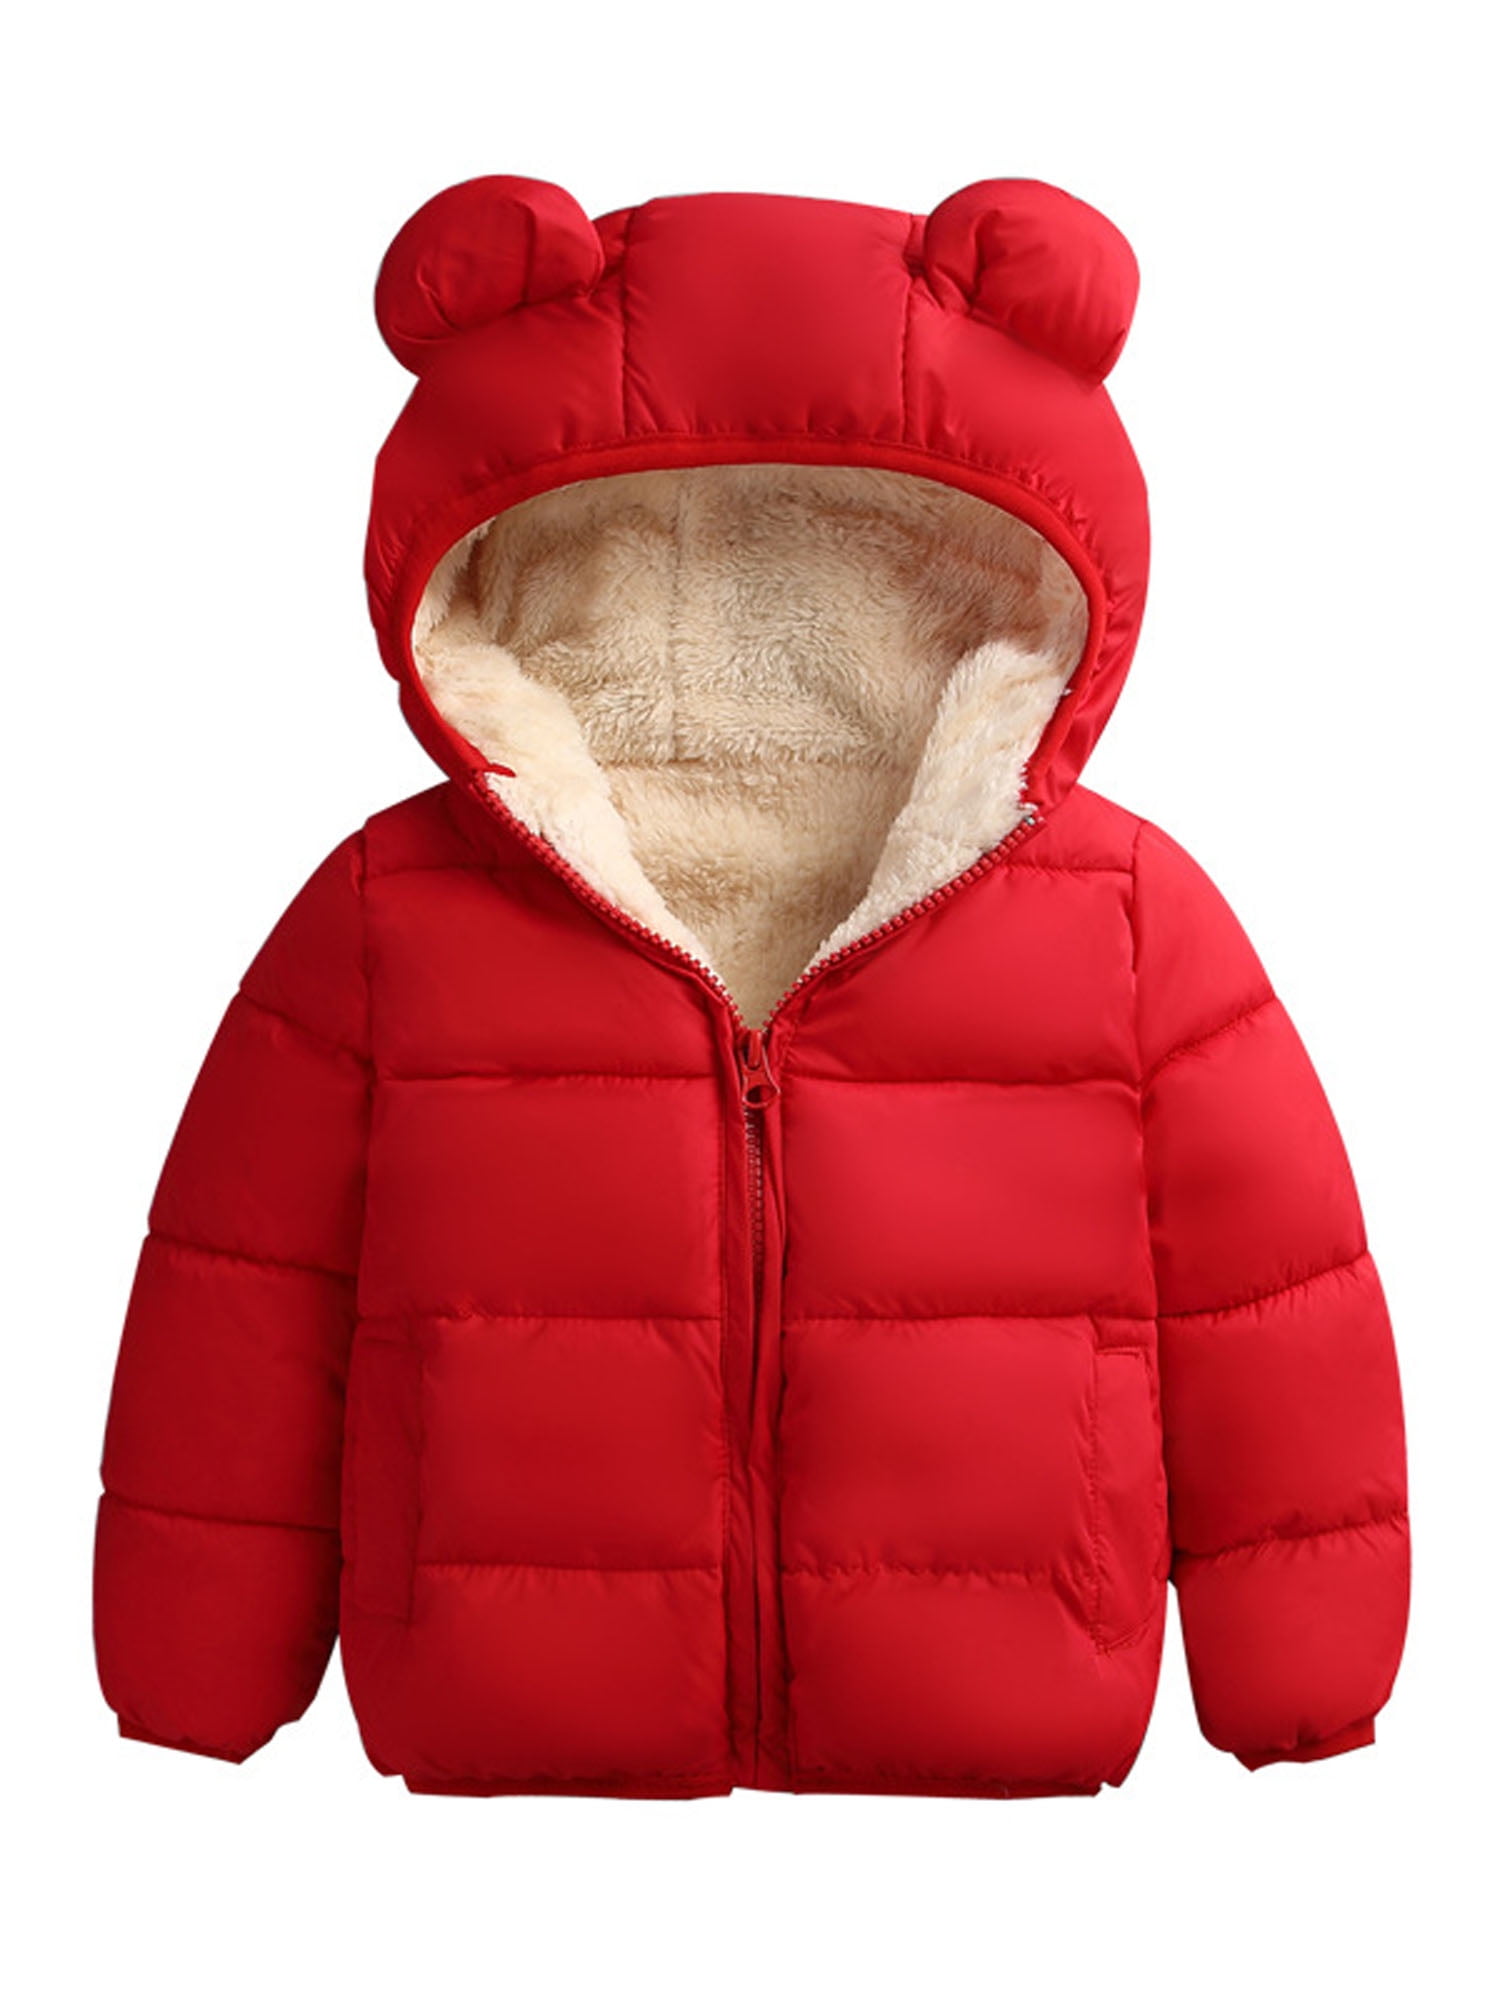 OCEAN-STORE Winter Kids Baby Boys Girls 0 Months-7T Hooded Jacket Chidren Warm Thick Coat Outerwear Clothes 